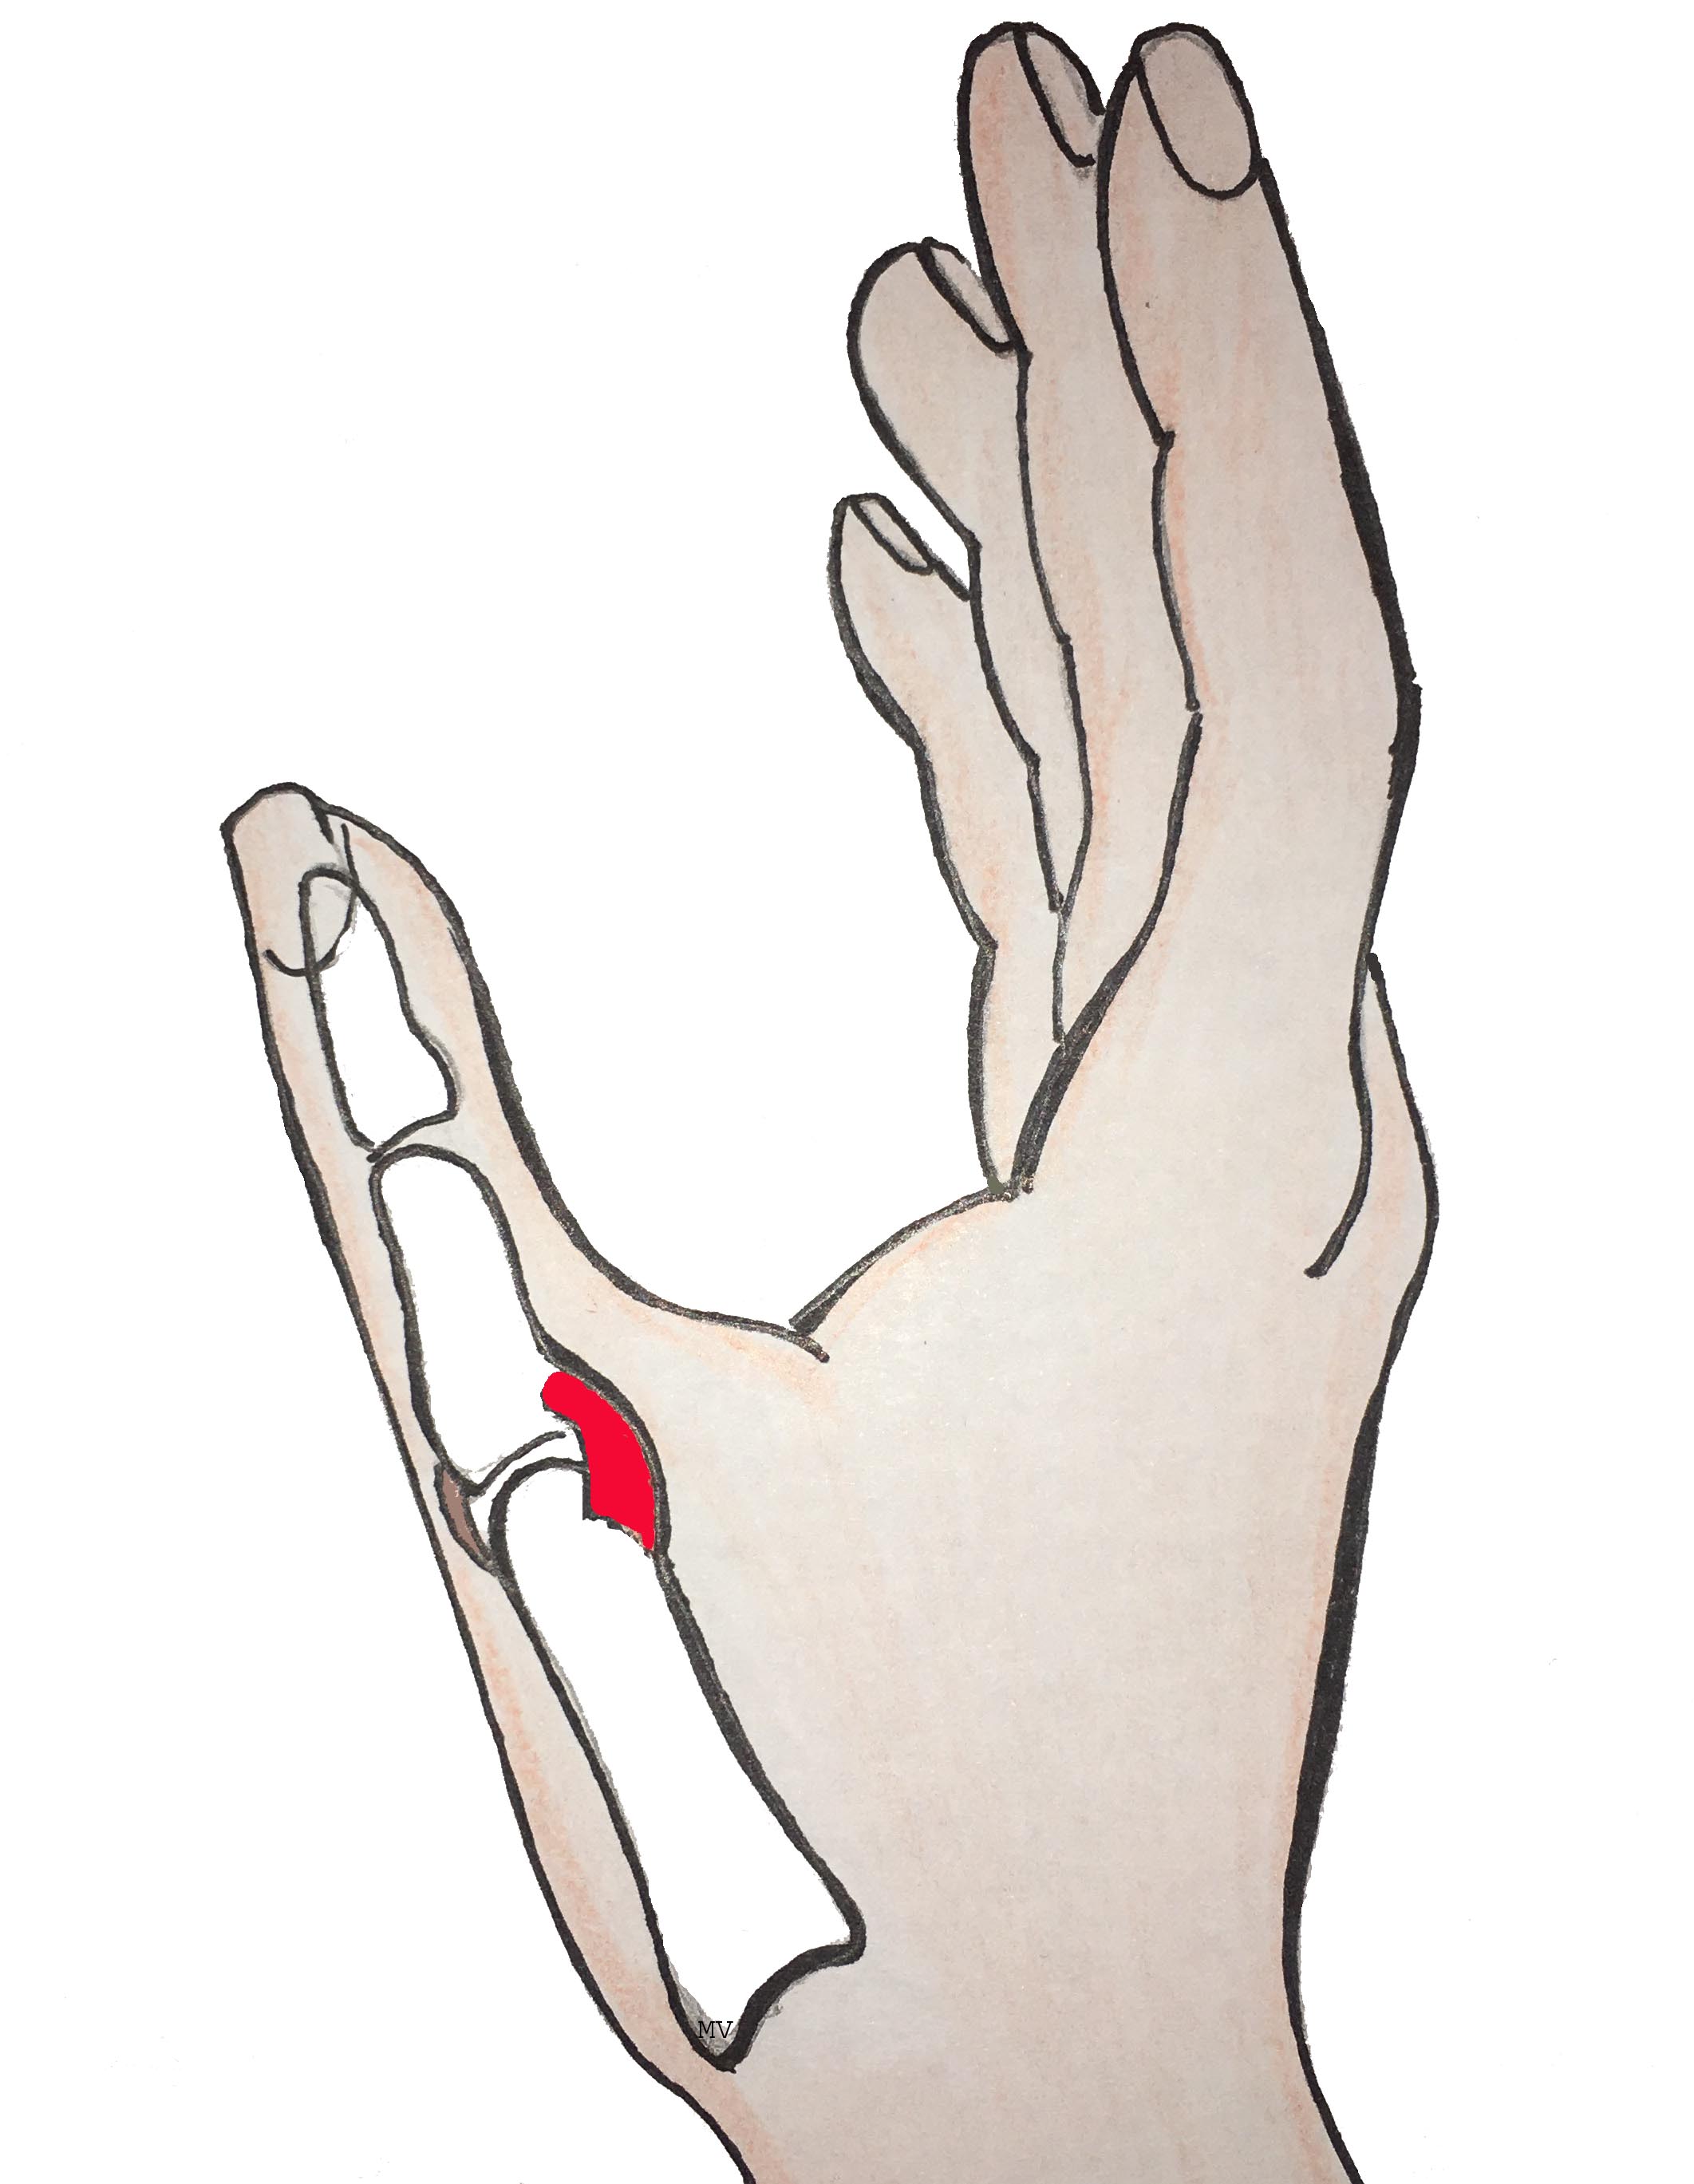 Ligament latéral interne du pouce (en rouge)